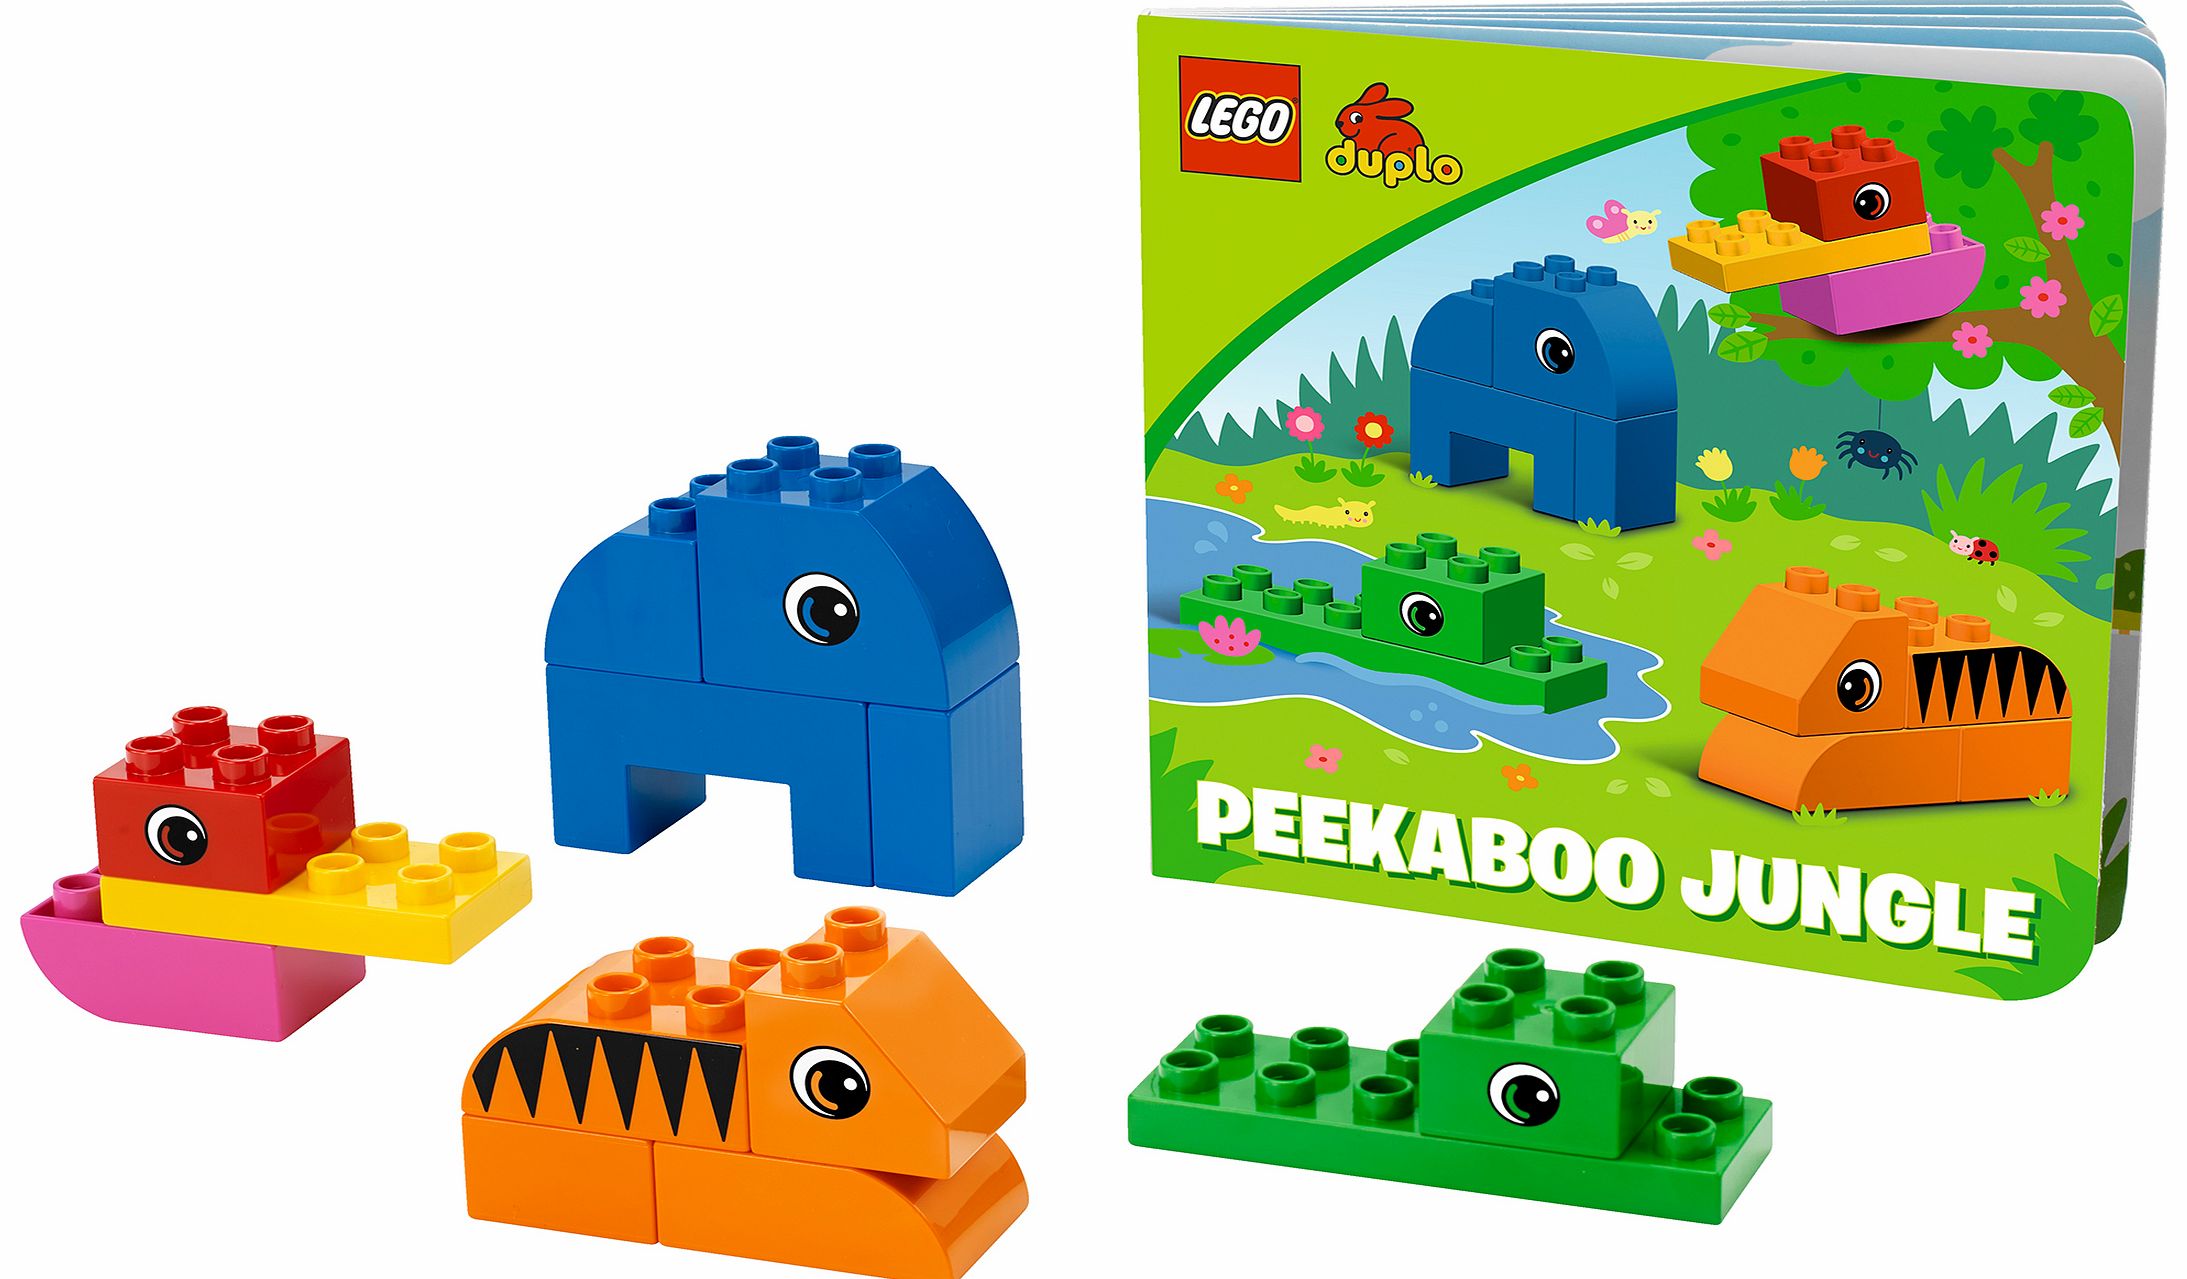 Lego DUPLO Peekaboo Jungle 10560